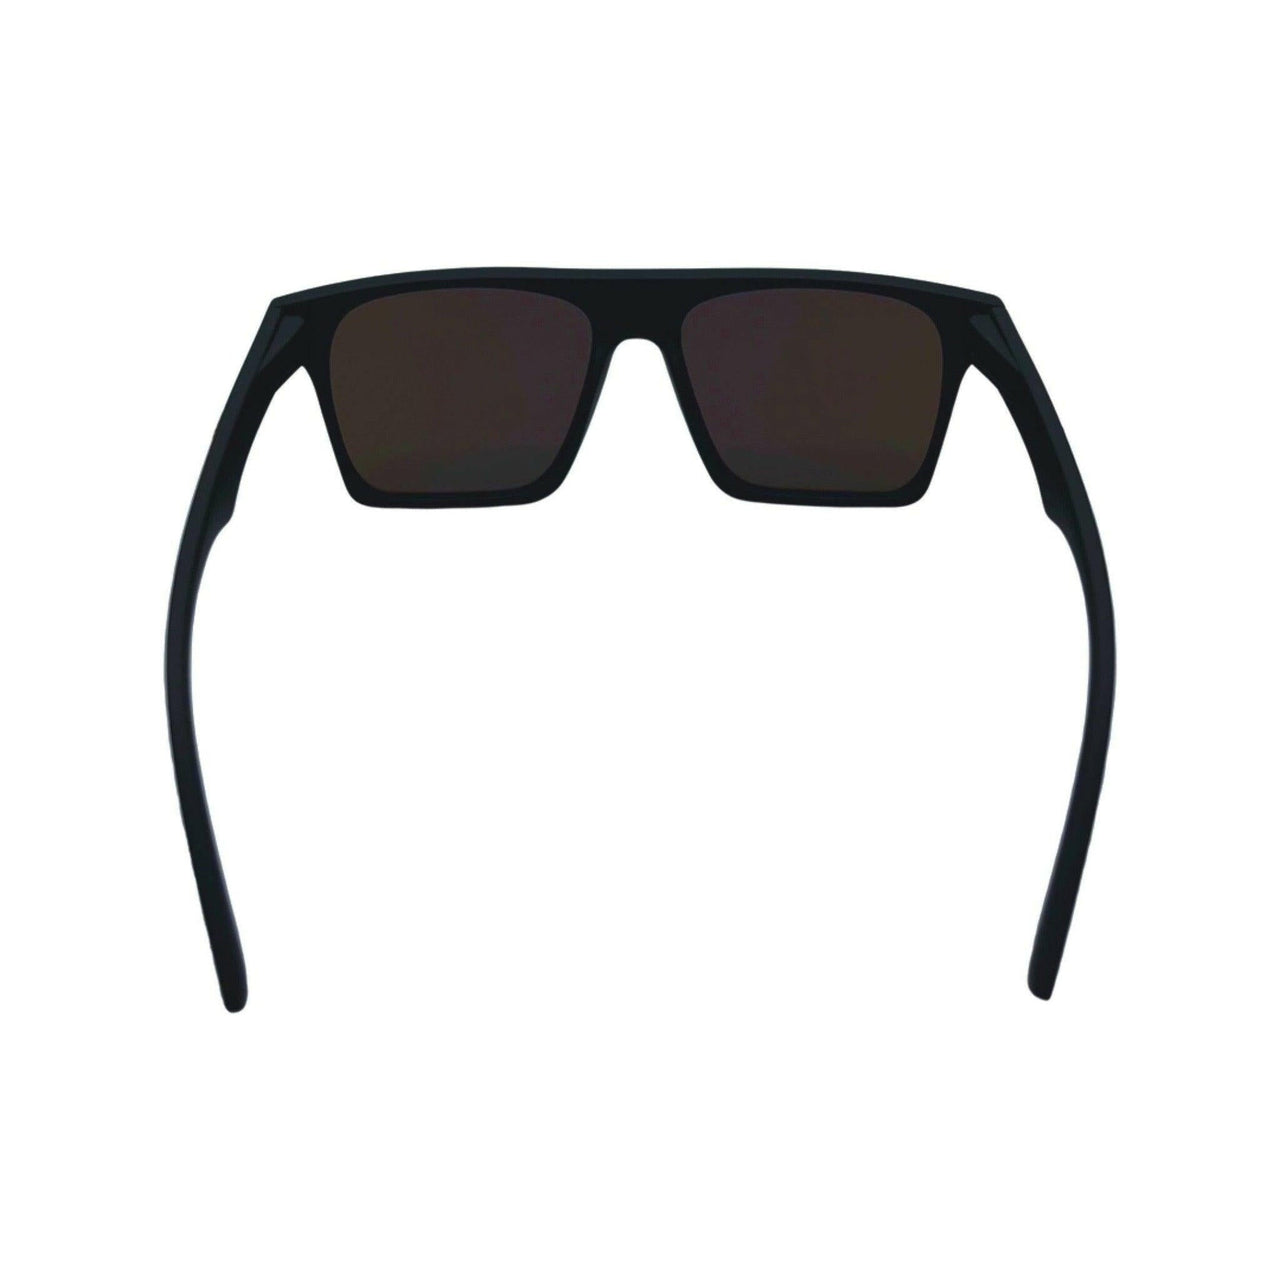 Blue Party Shades Polarized Lens Sunglasses - Rebel Reaper Clothing Company Sunglasses